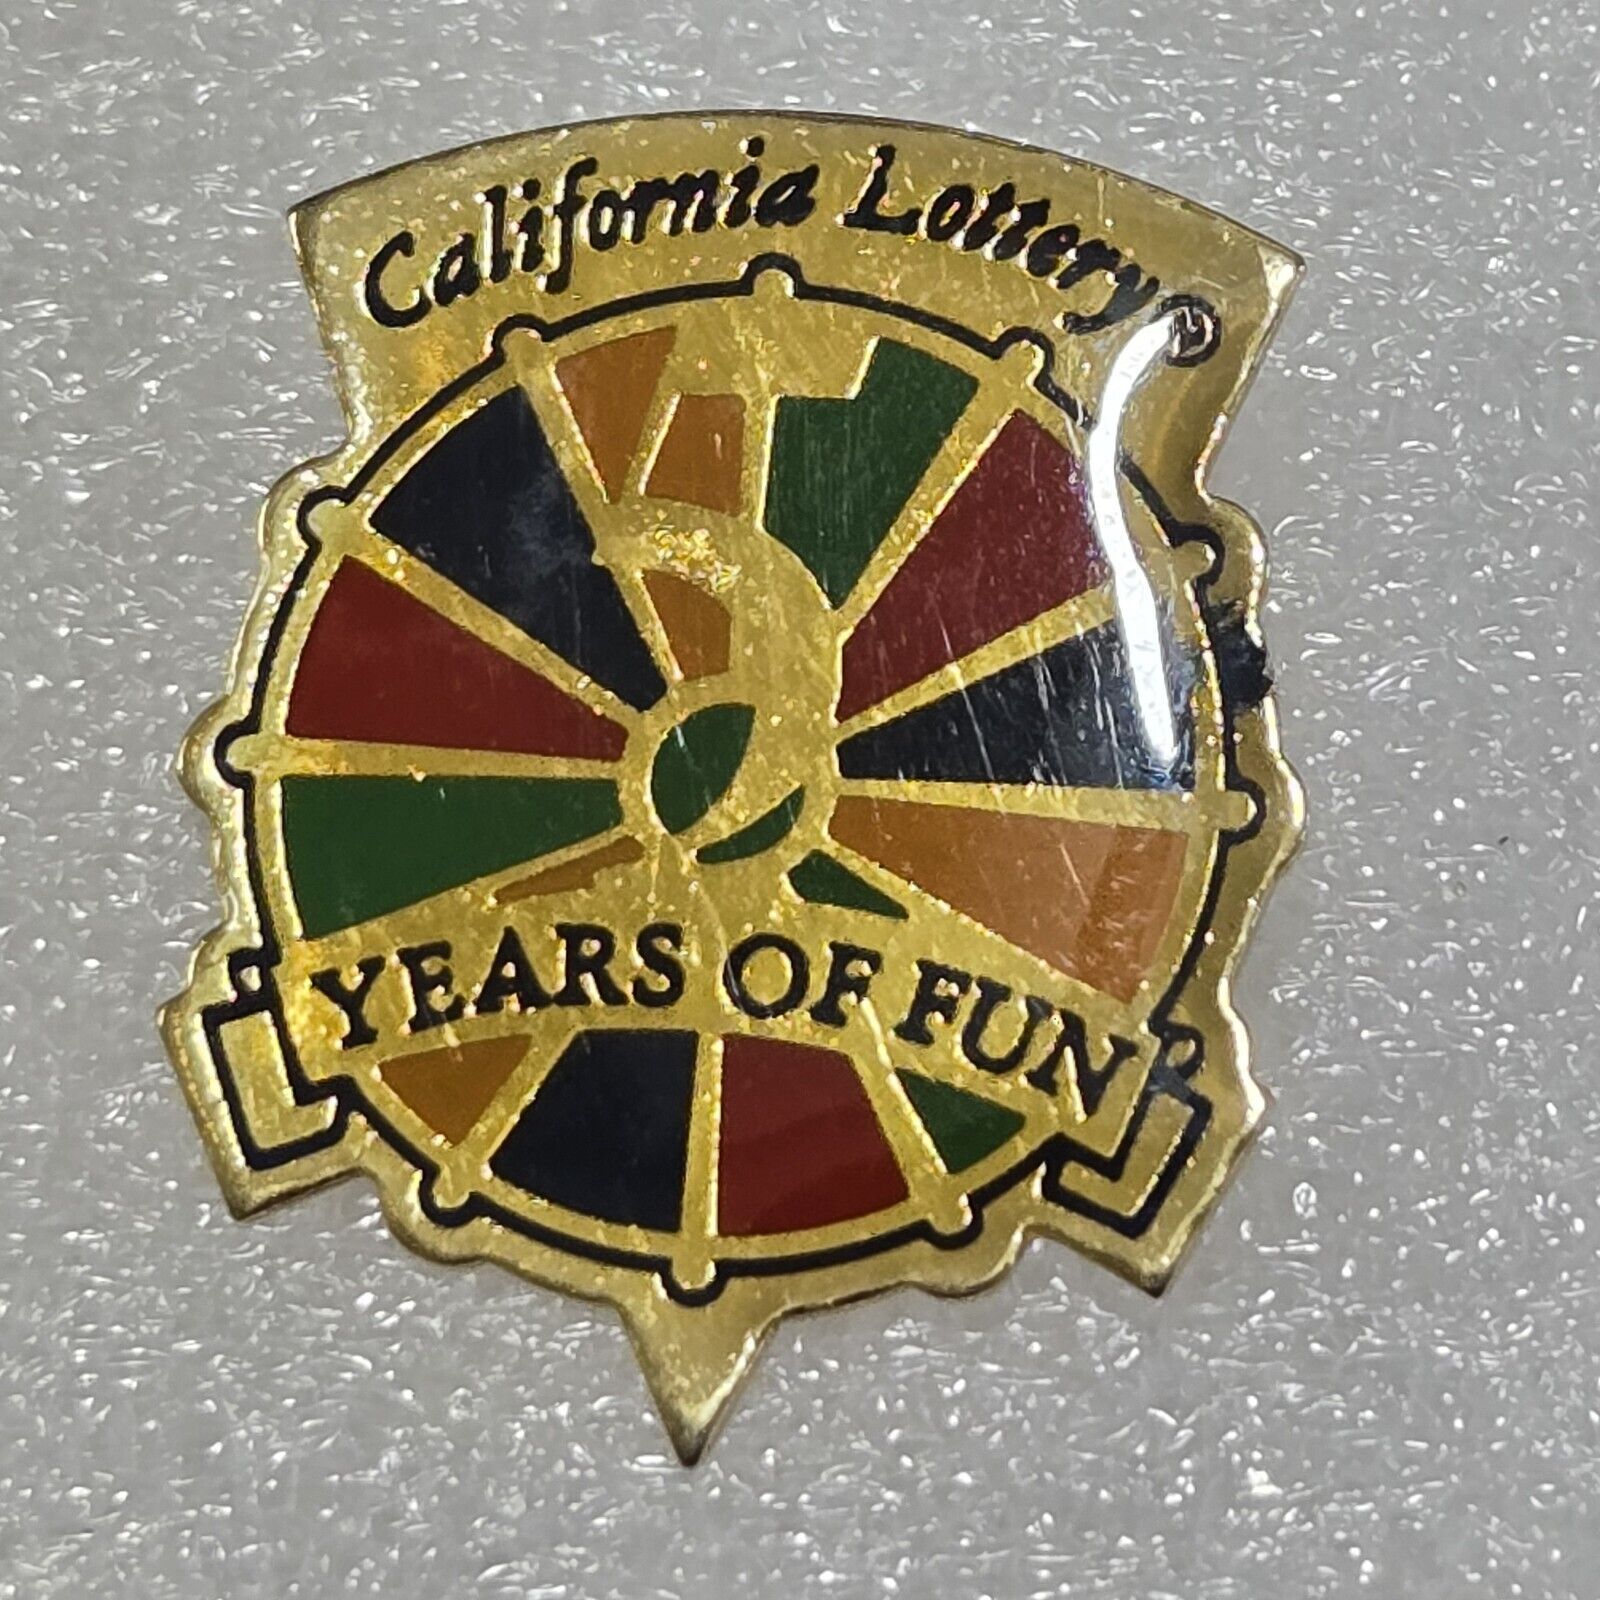 Pin Lapel Vintage 1990 California Lottery 